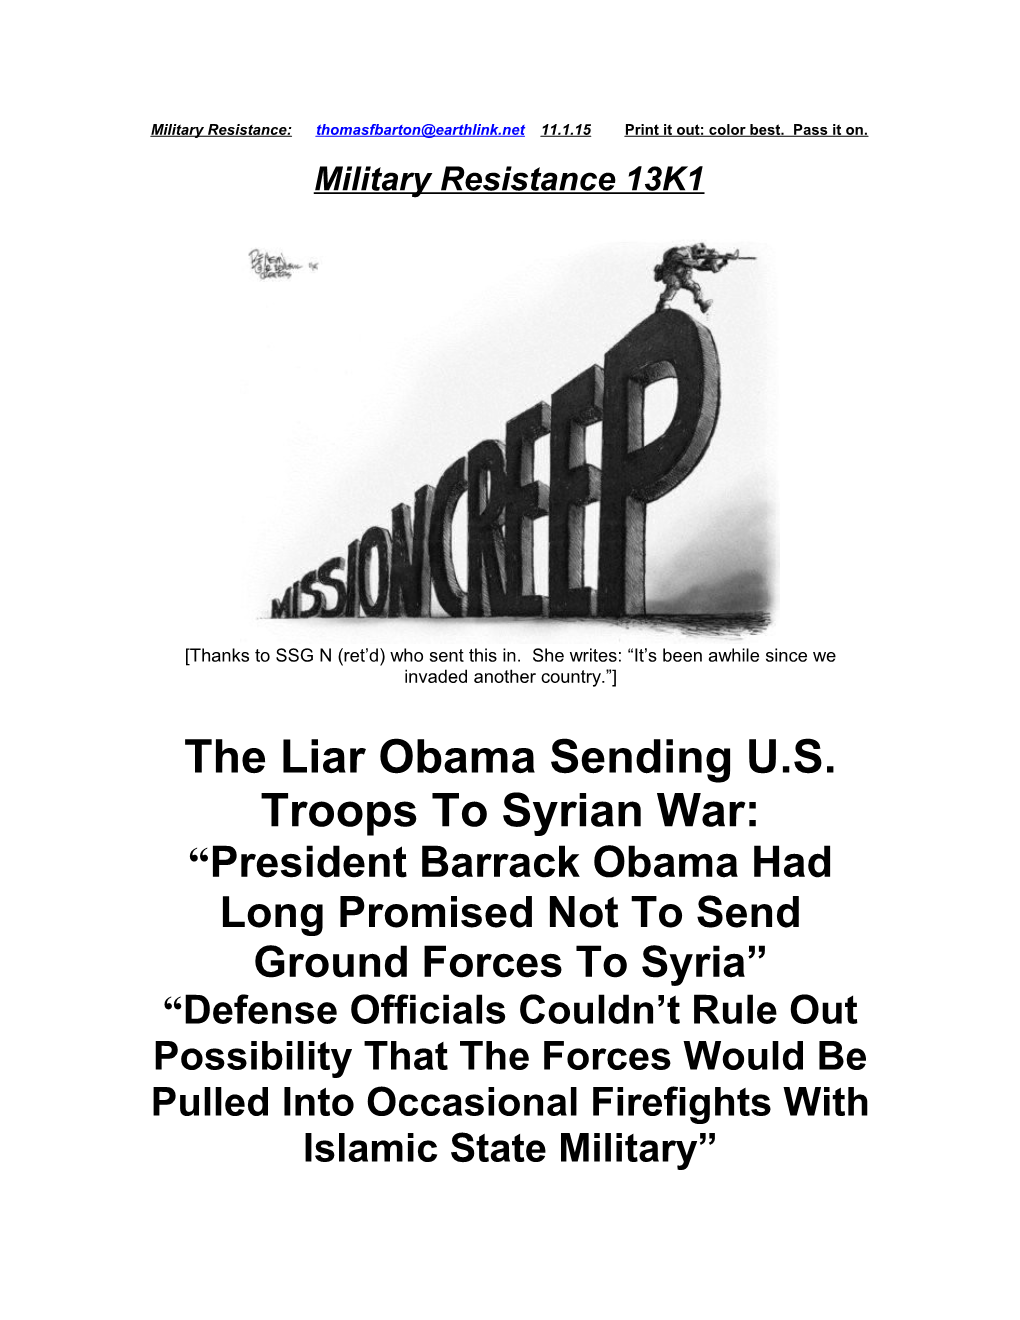 The Liar Obama Sending U.S. Troops to Syrian War